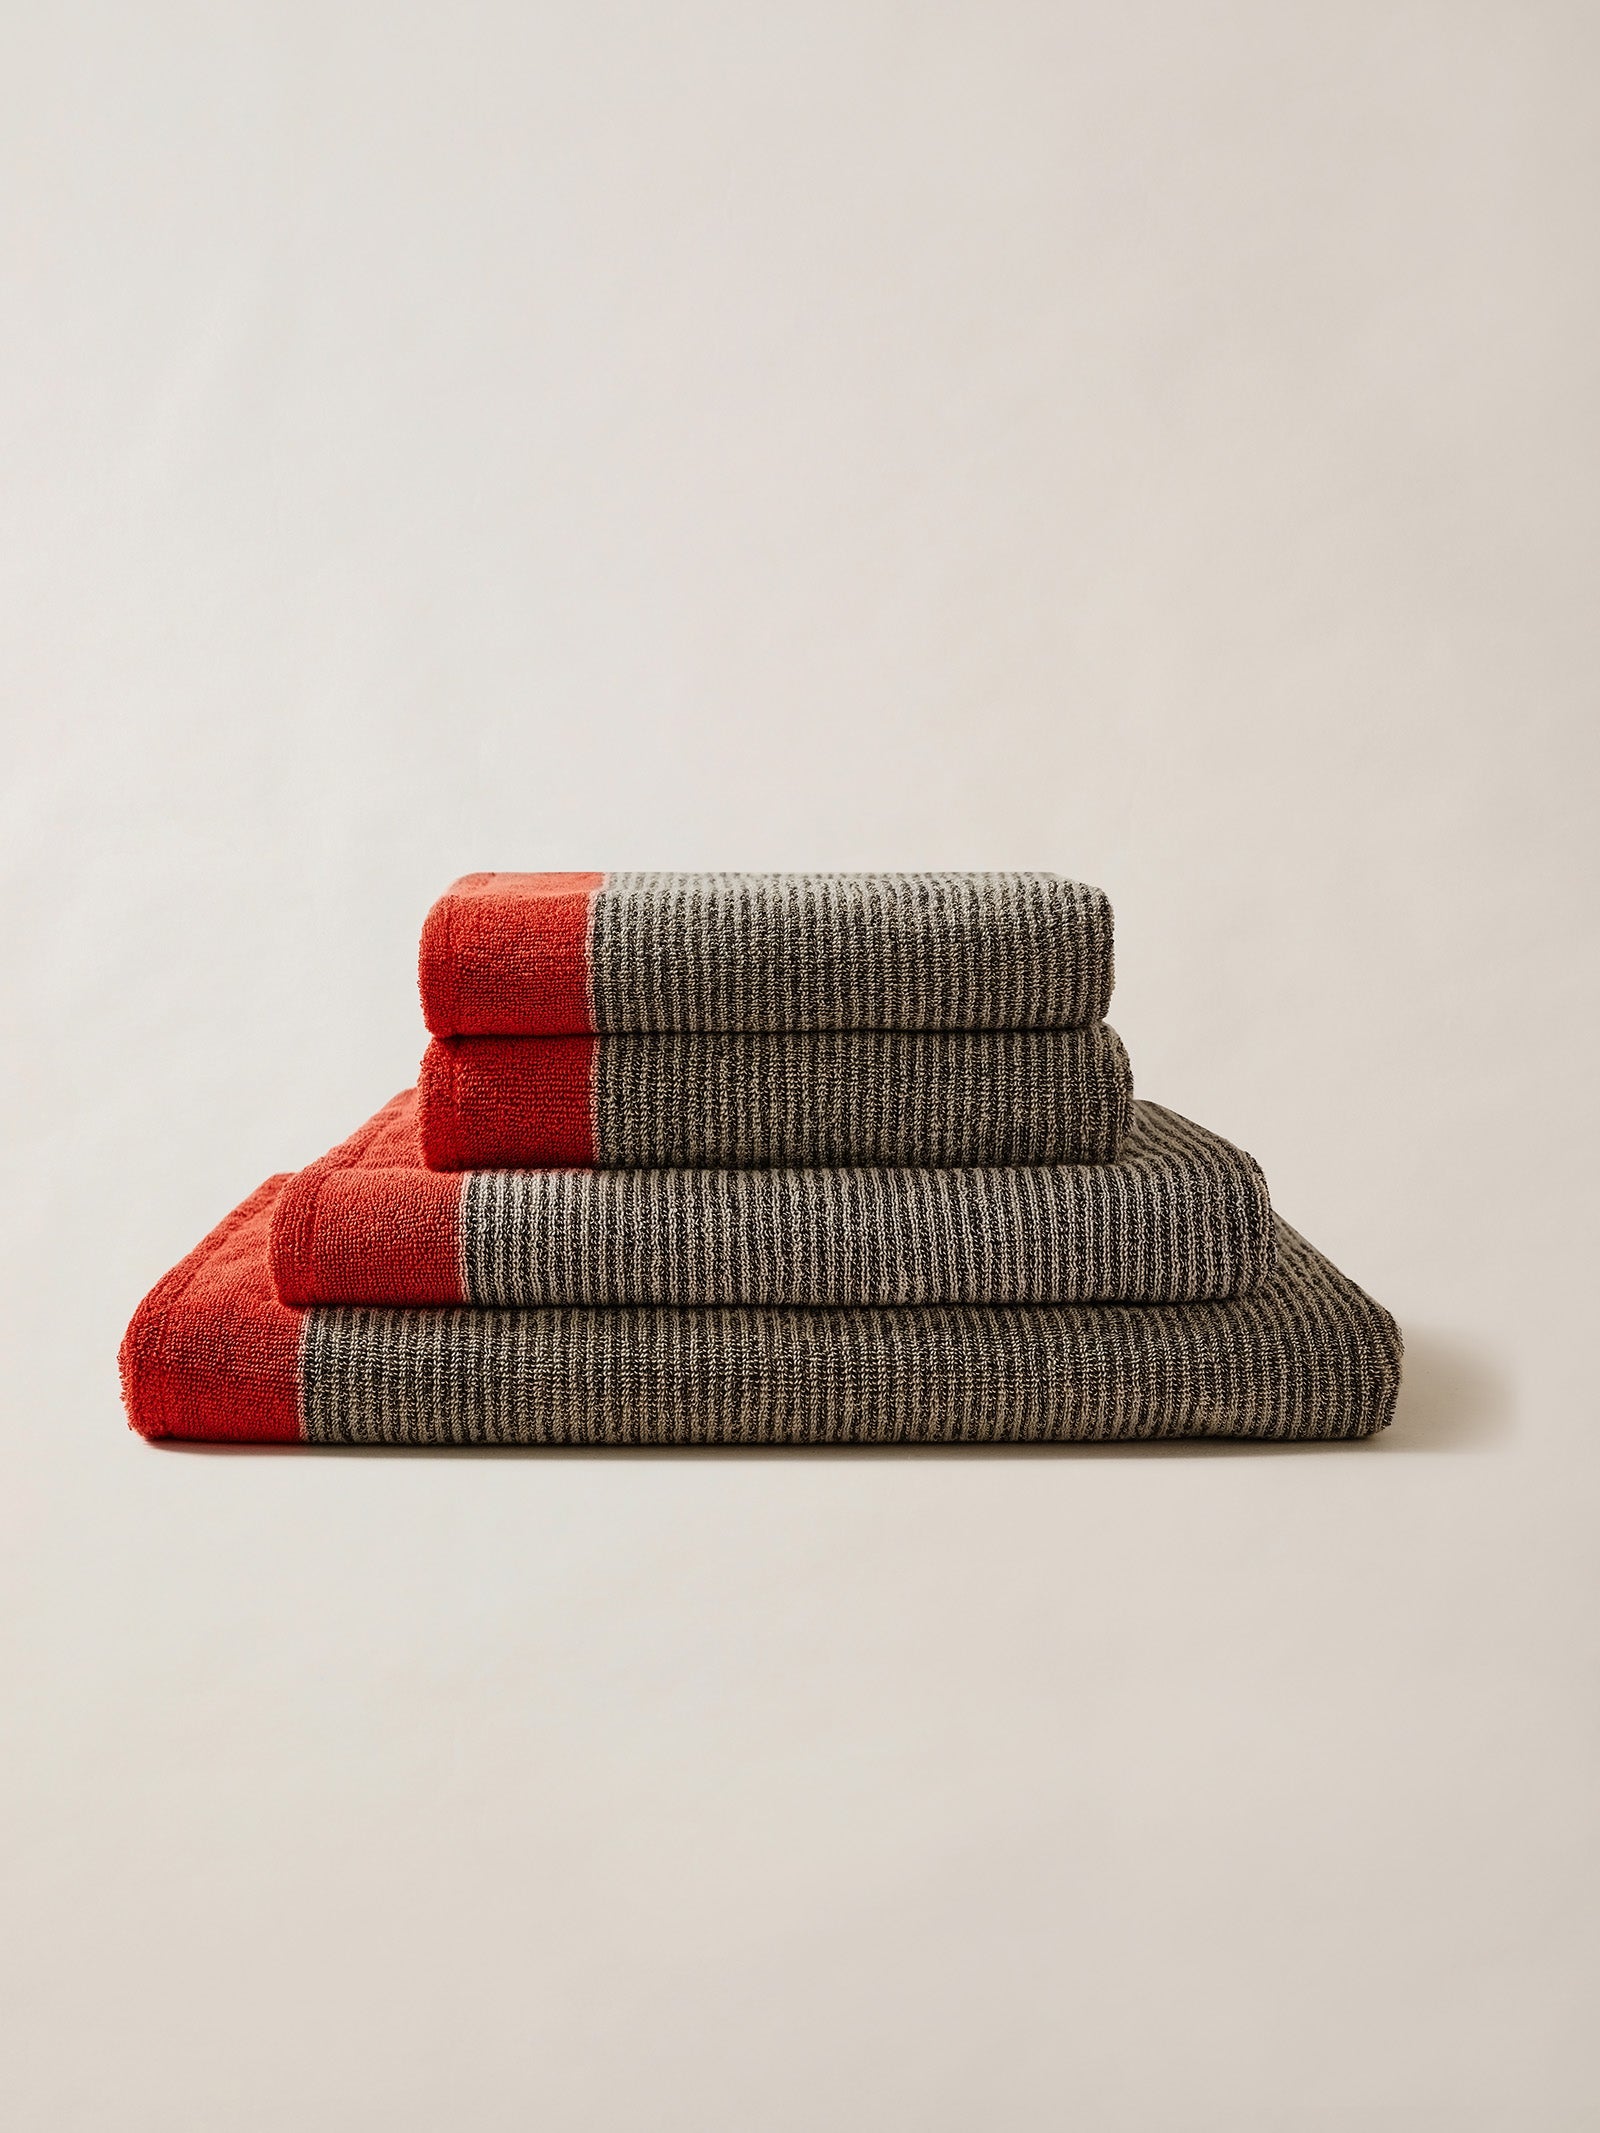 Medium Towel - Smoke and Terra Red